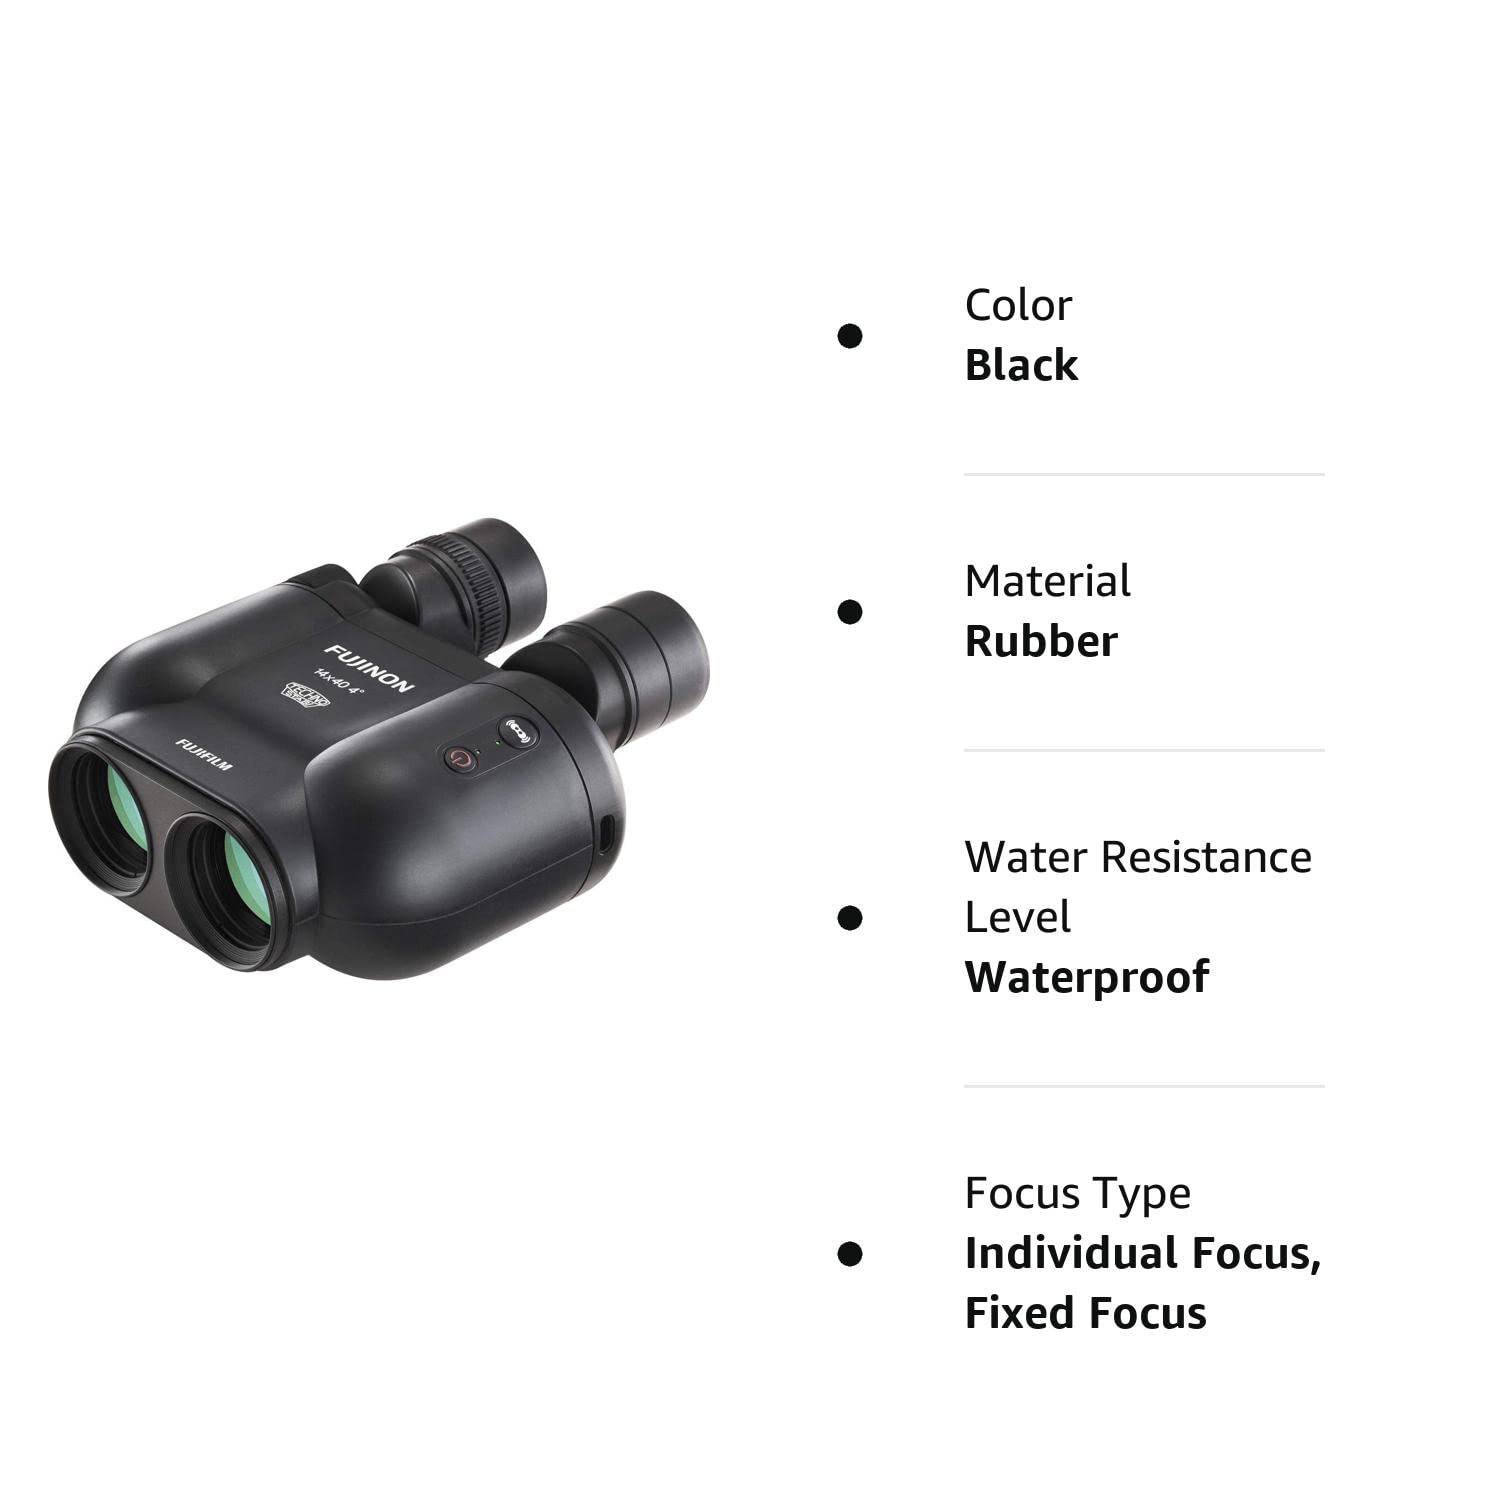 Fujinon Techno-Stabi TS-X 14x40 Image Stabilization Binocular - Black